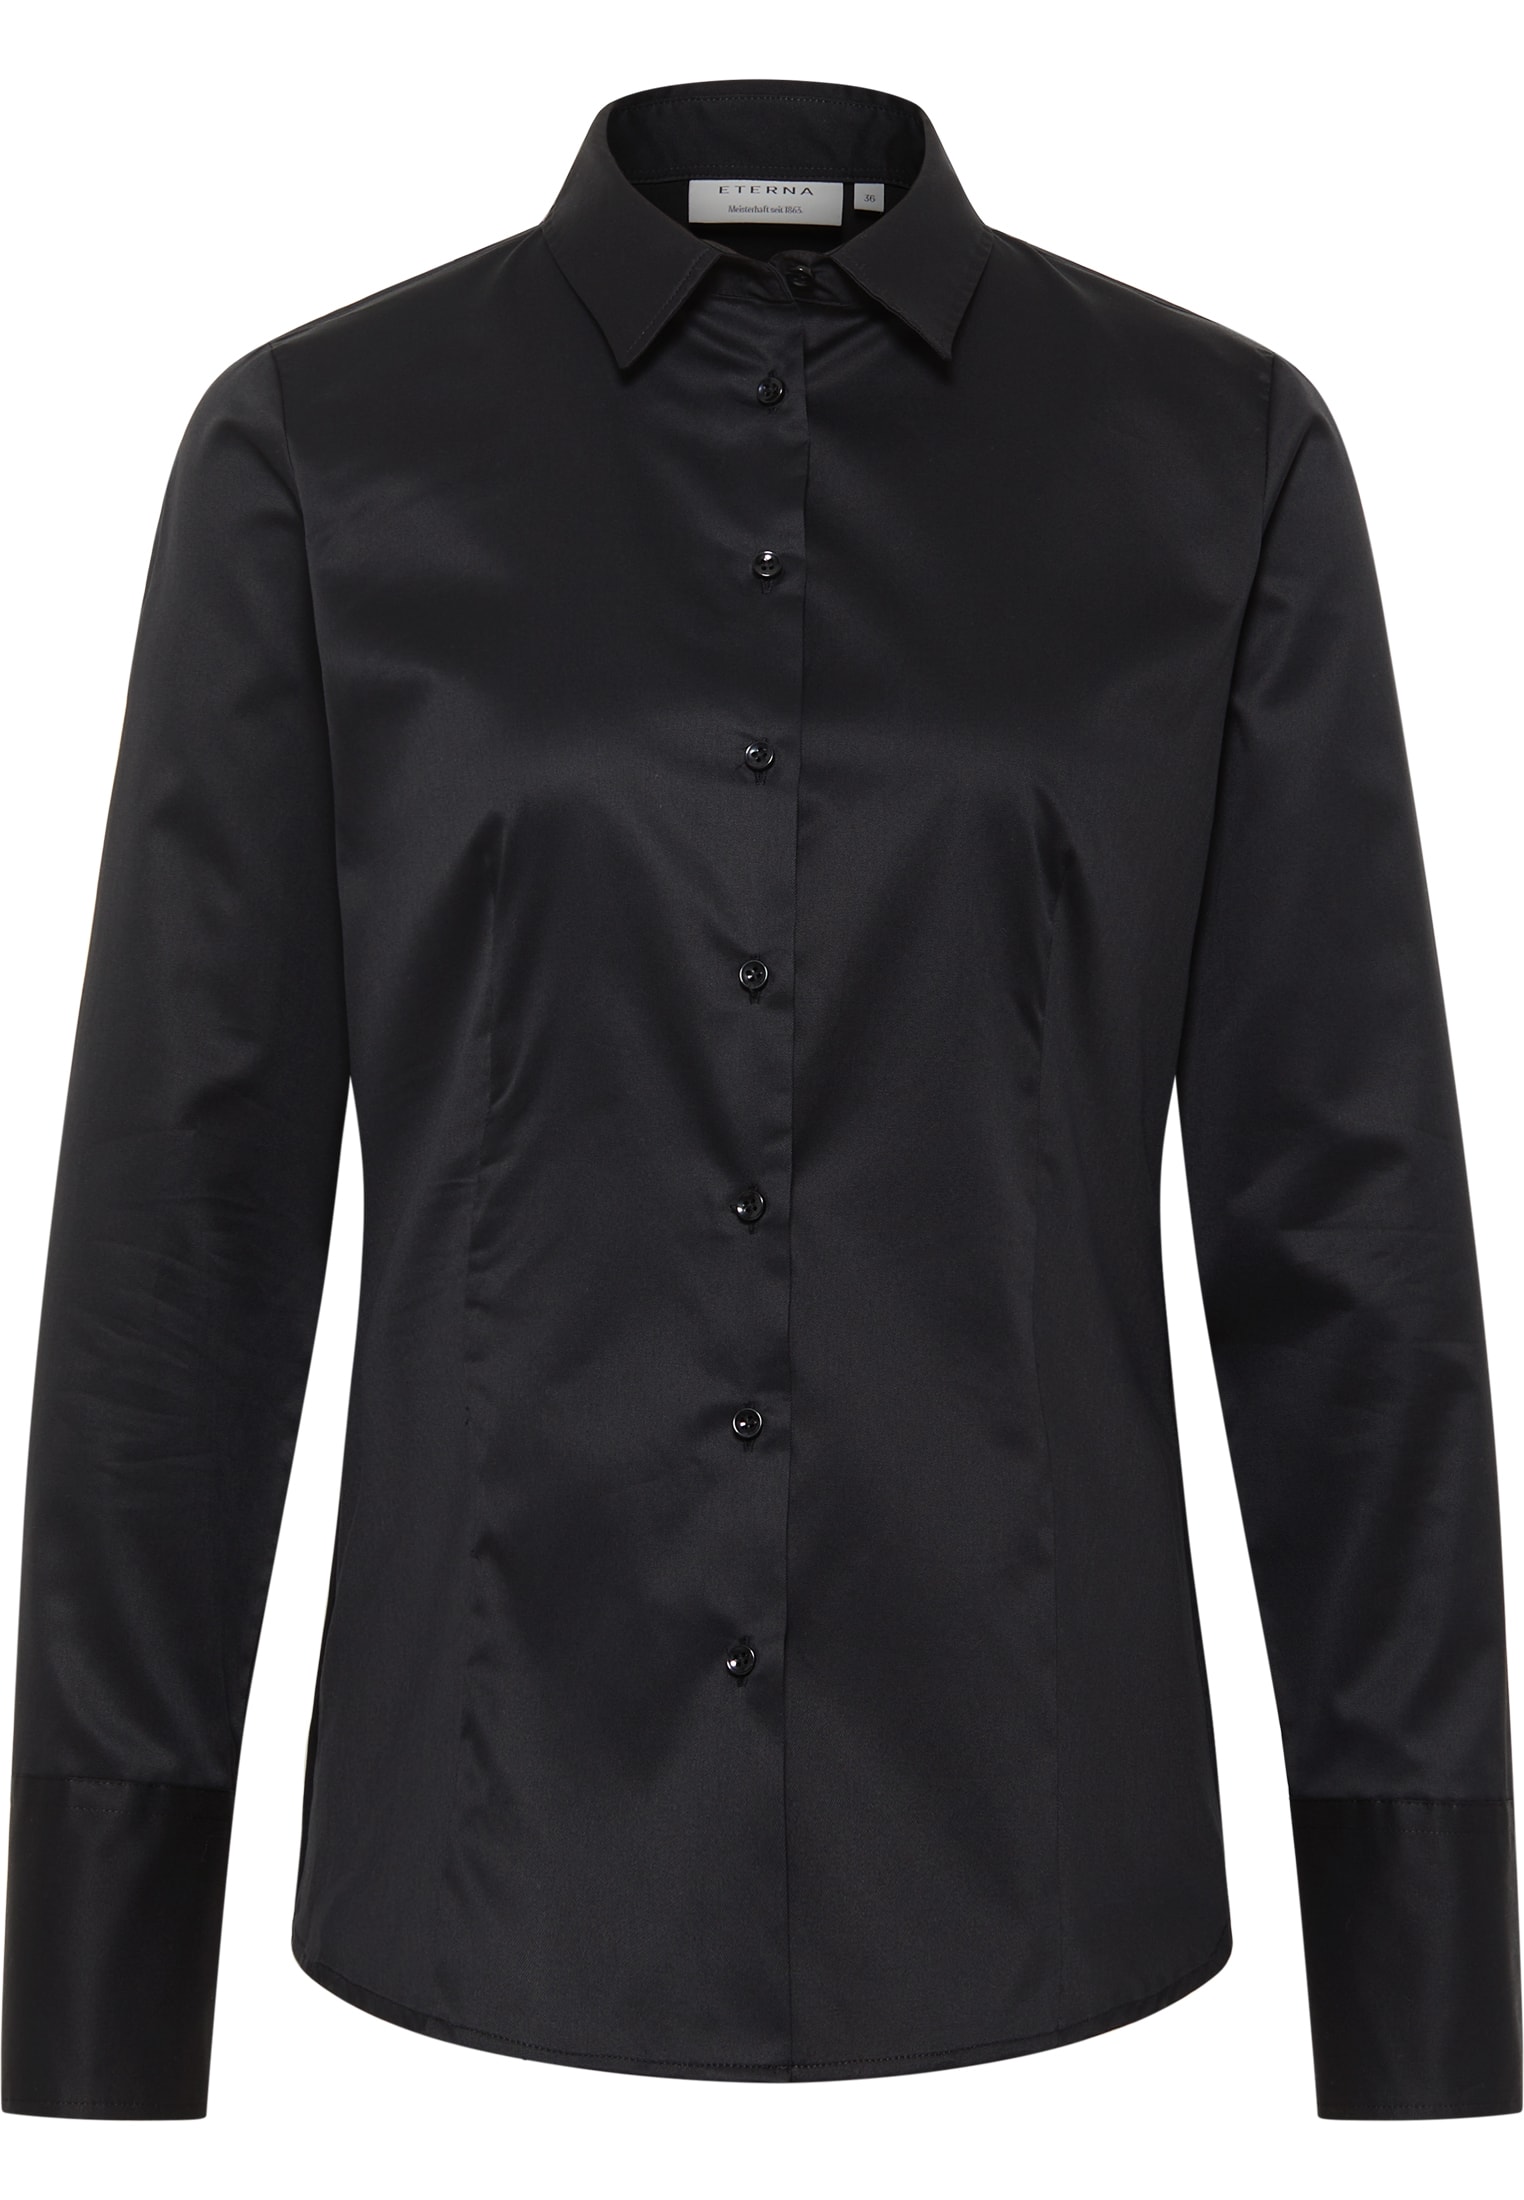 black | sleeve | Blouse black | Cover | plain in long 38 2BL00075-03-91-38-1/1 Shirt